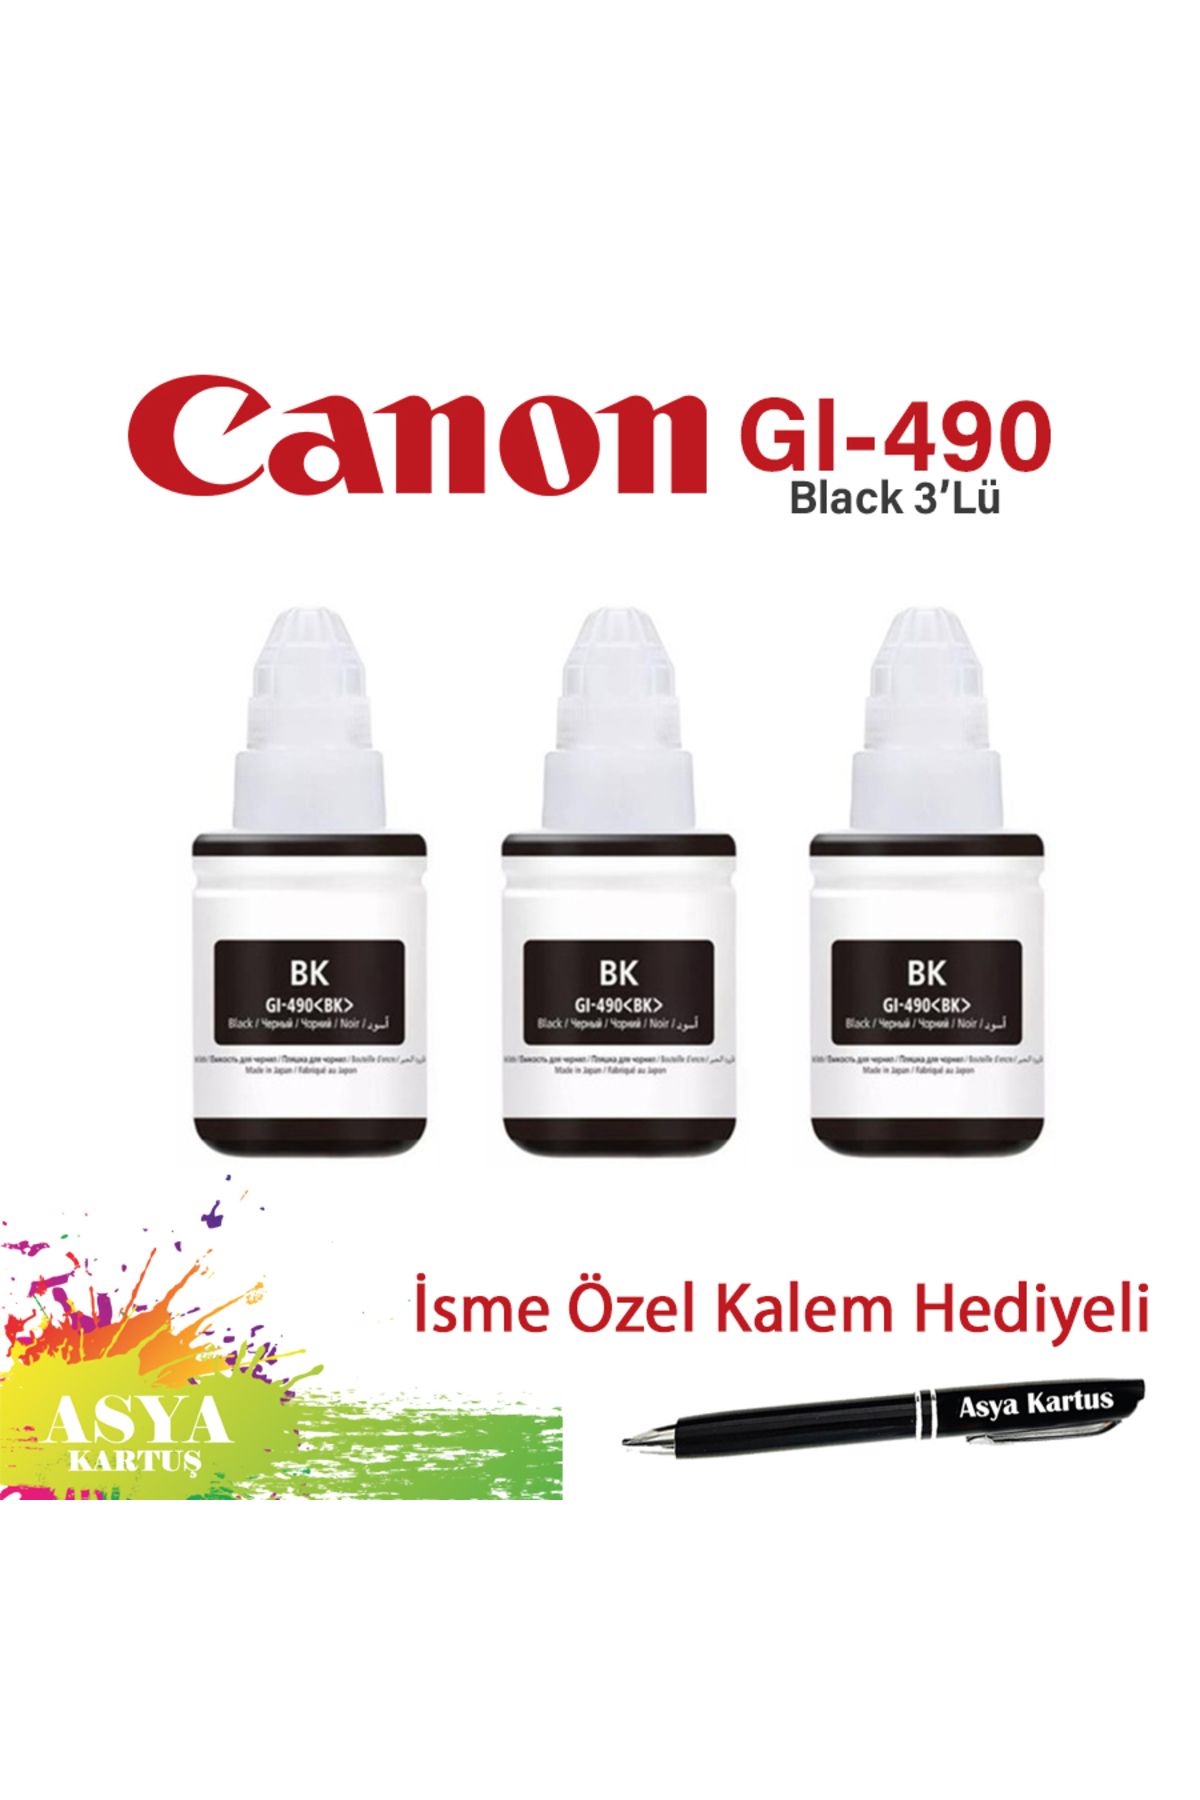 Canon Pixma G1400 Uyumlu GI-490 BK Siyah (Black) Kartuş 135 ml  3'LÜ Mürekkep Kartuşu